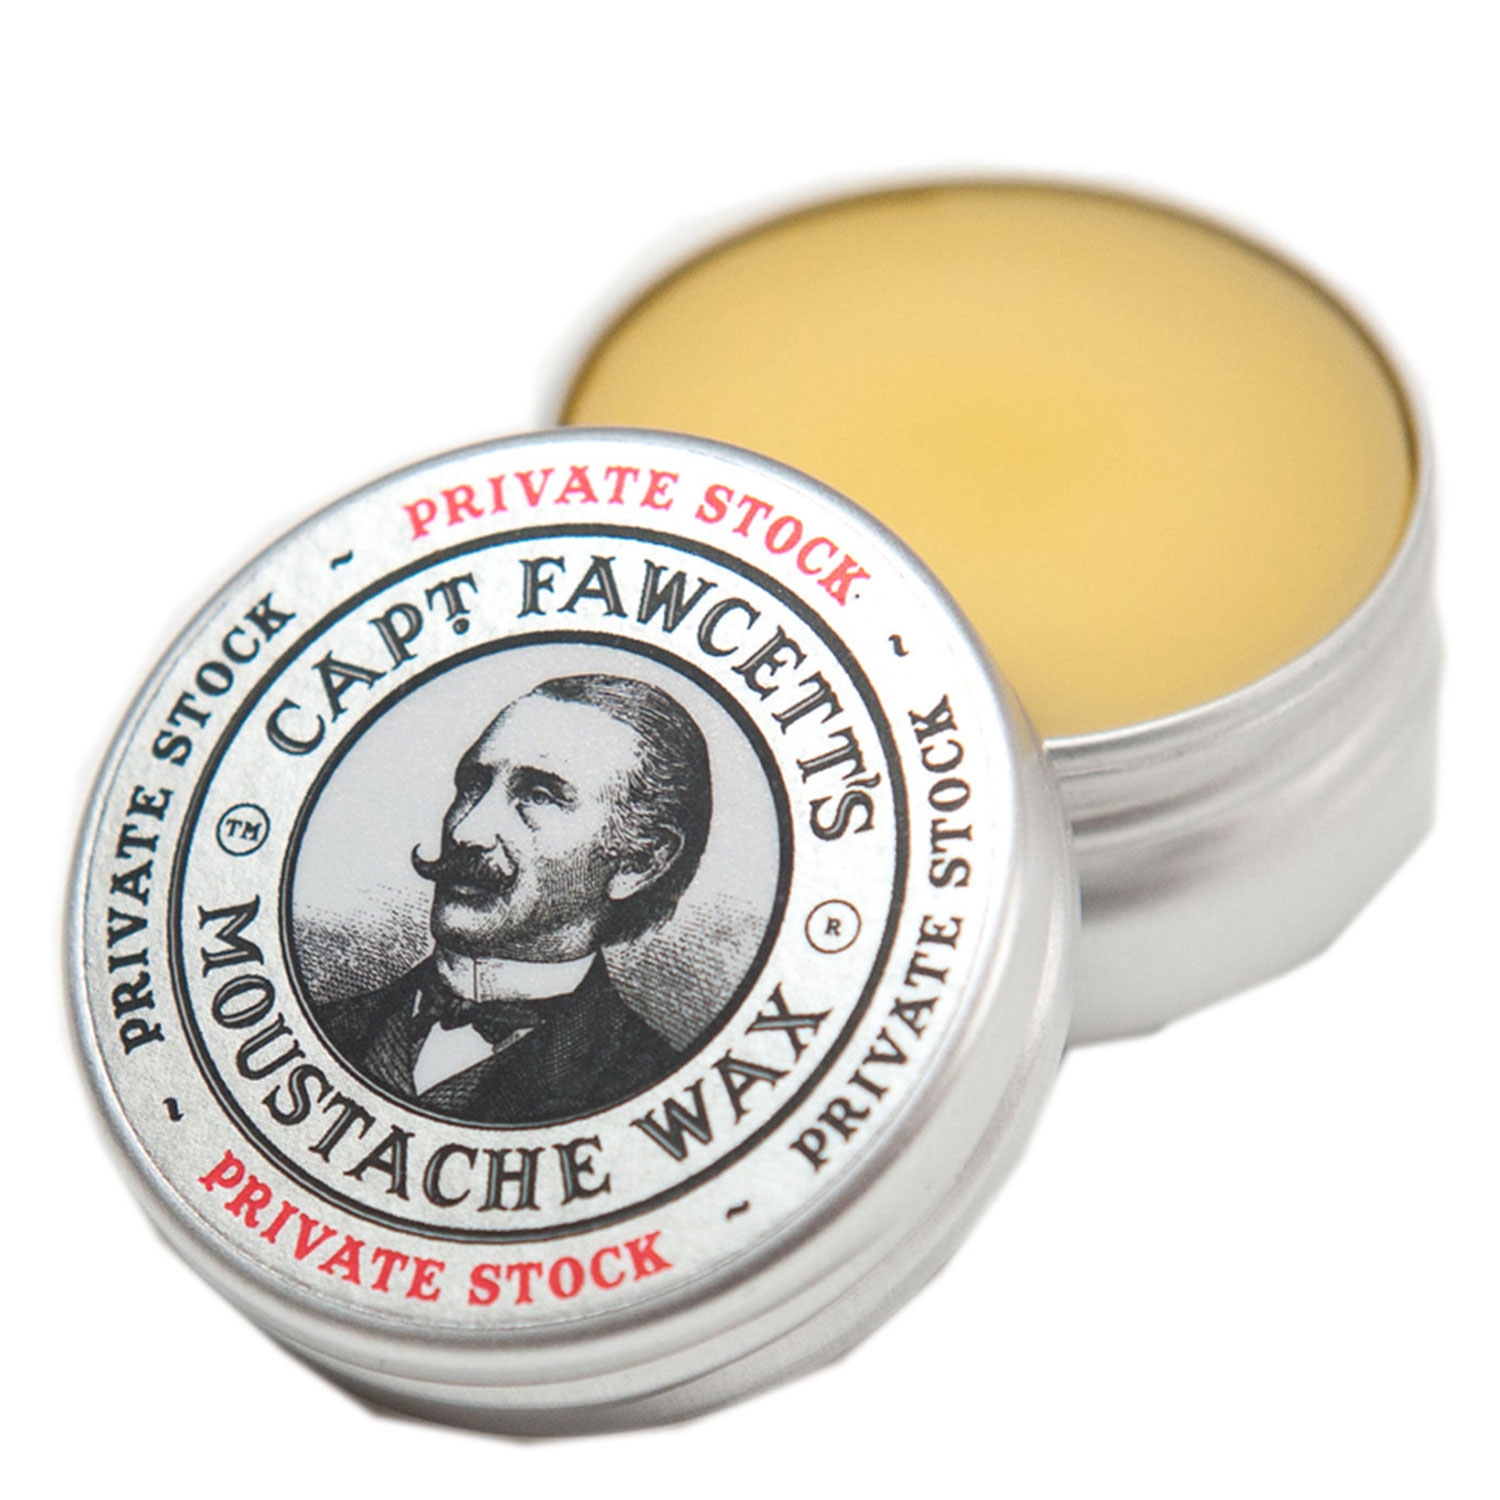 Produktbild von Capt. Fawcett Care - Private Stock Moustache Wax